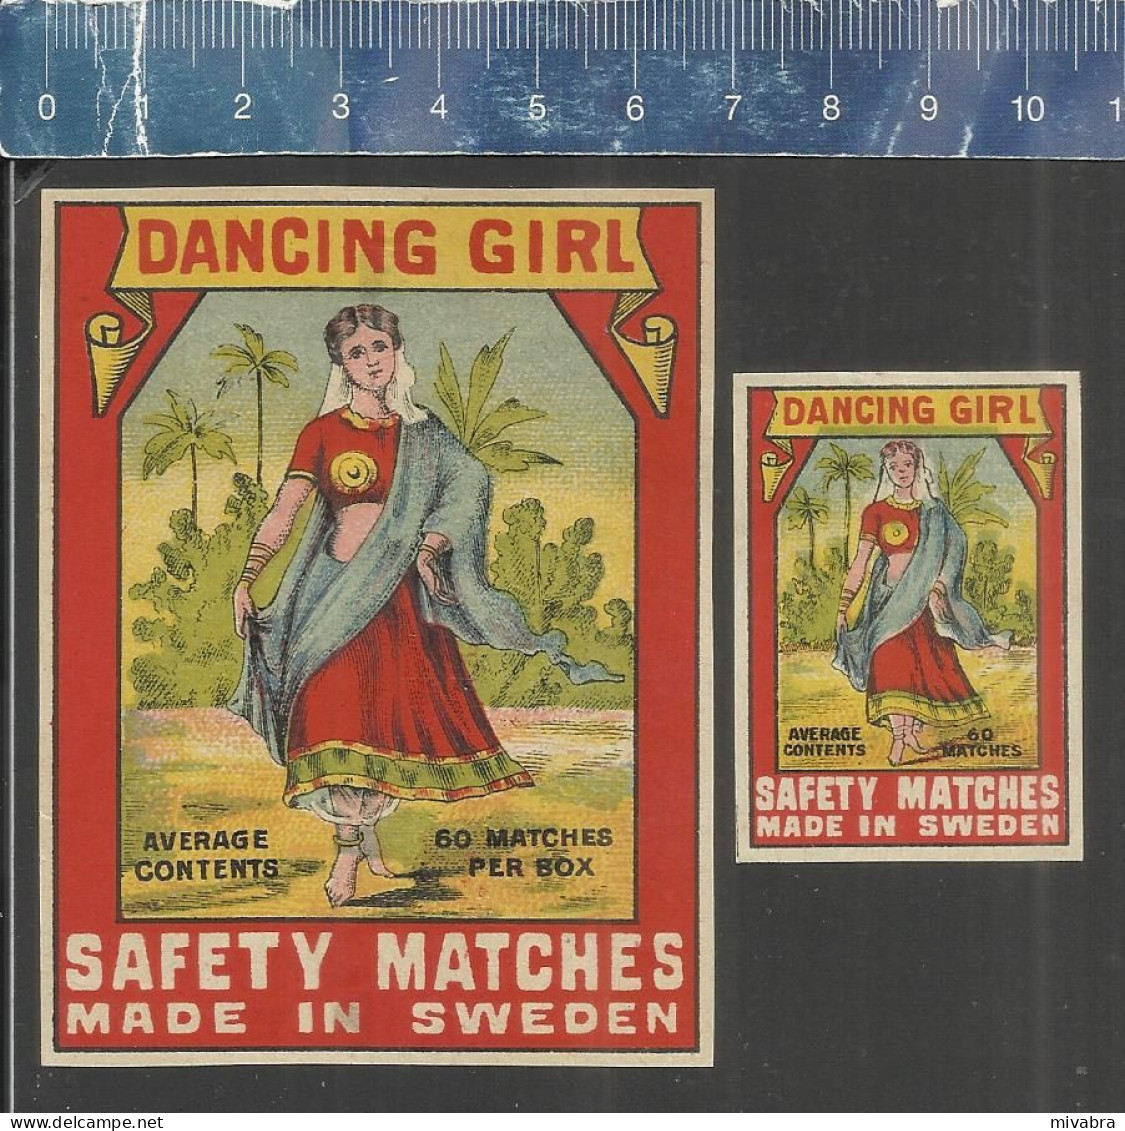 DANCING GIRL ( AVERAGE CONTENTS 60 MATCHES PER BOX) - OLD VINTAGE MATCHBOX LABELS MADE IN SWEDEN - Scatole Di Fiammiferi - Etichette